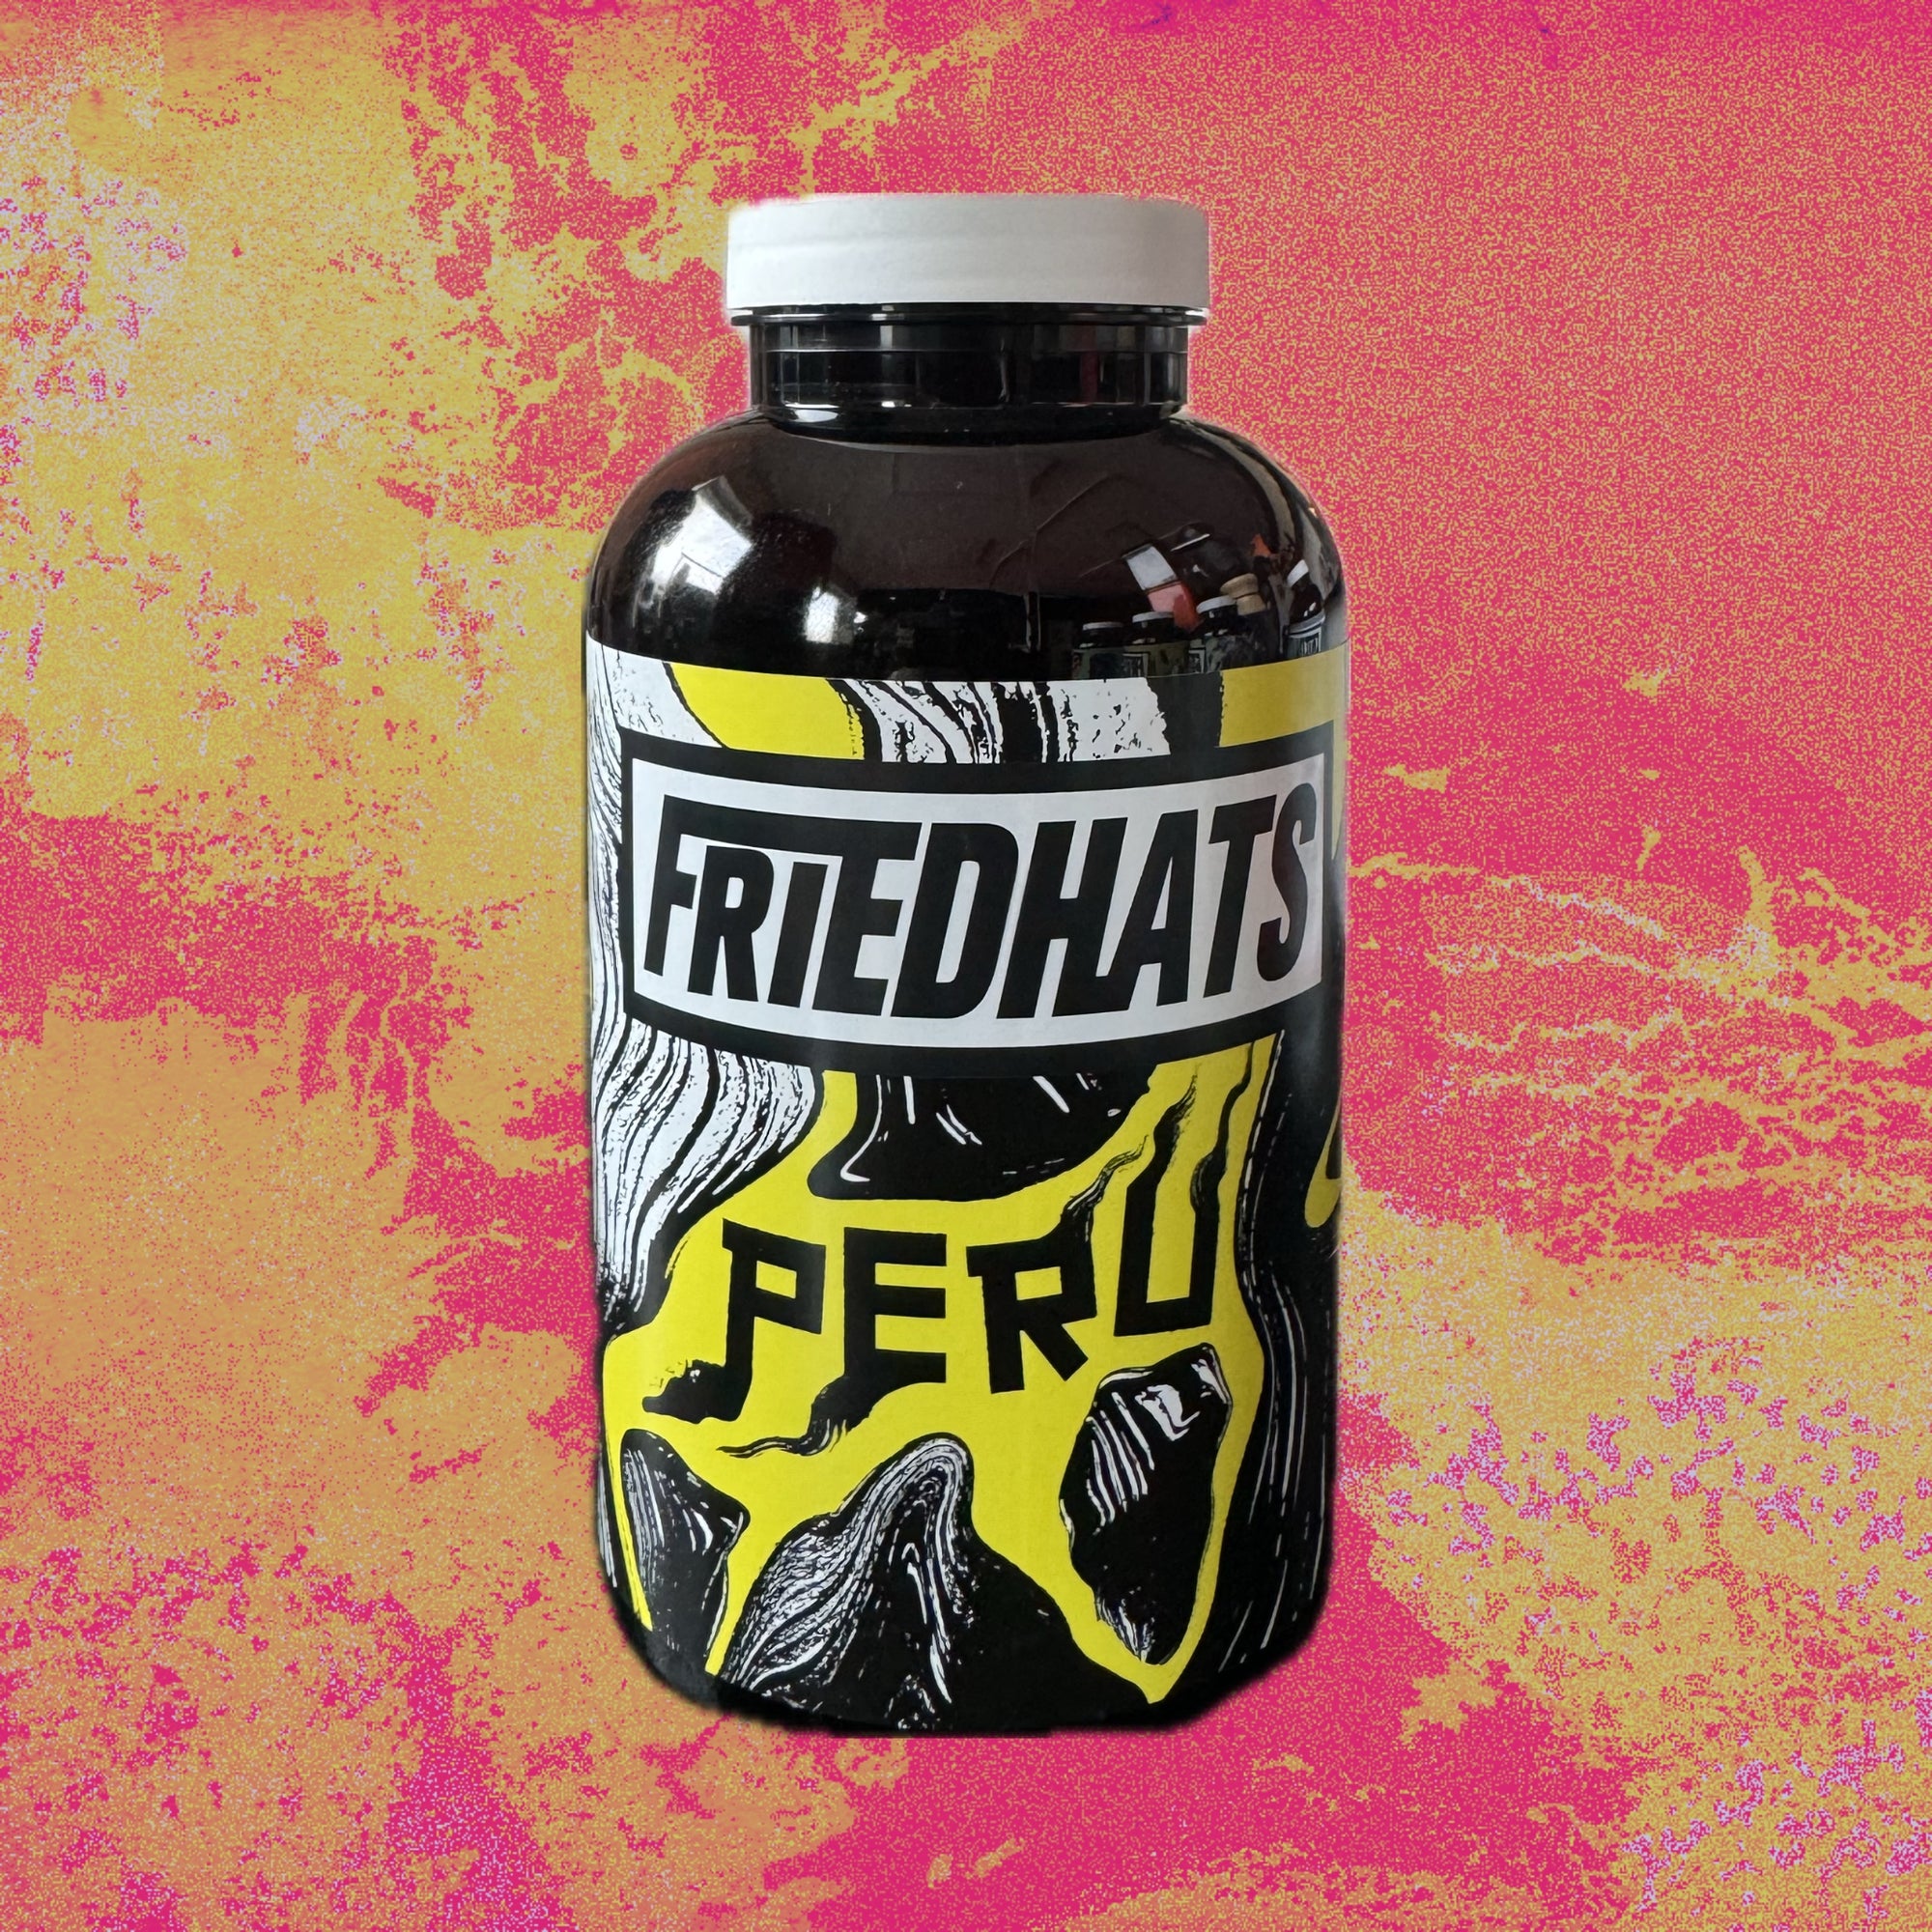 Friedhats - PERU